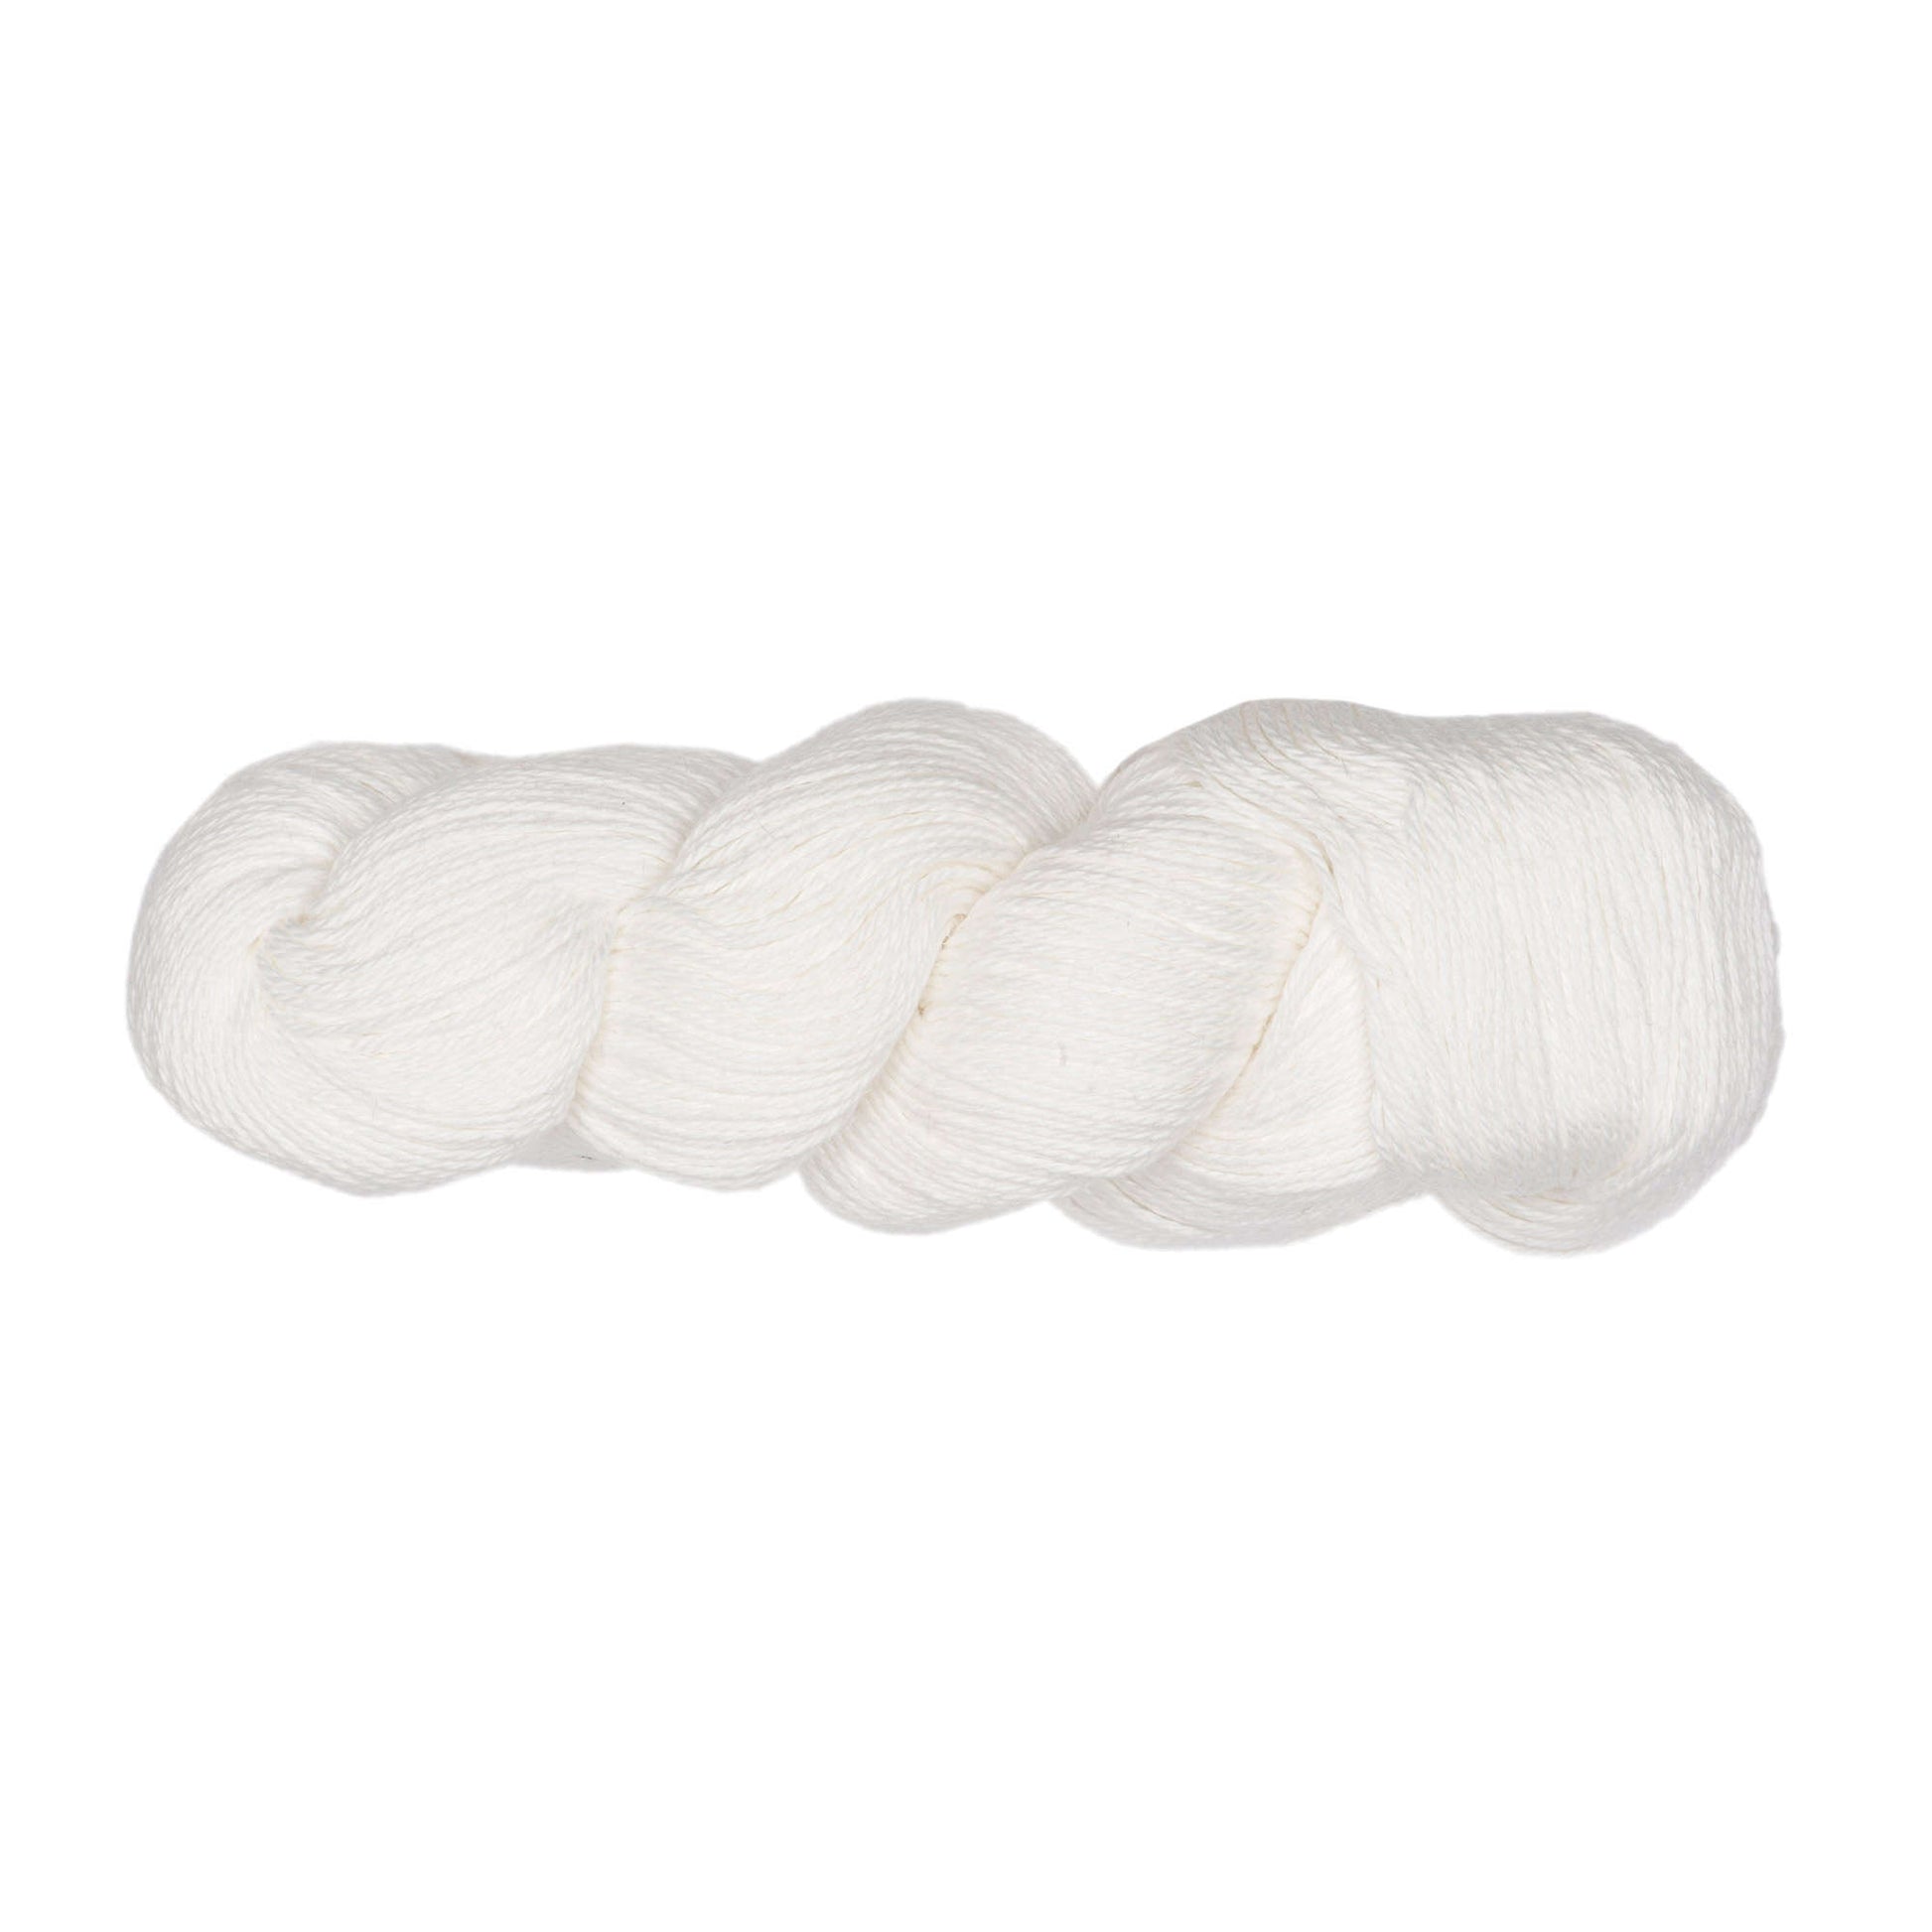 Sugar Bush Cabot Yarn - Discontinued Shades Western White